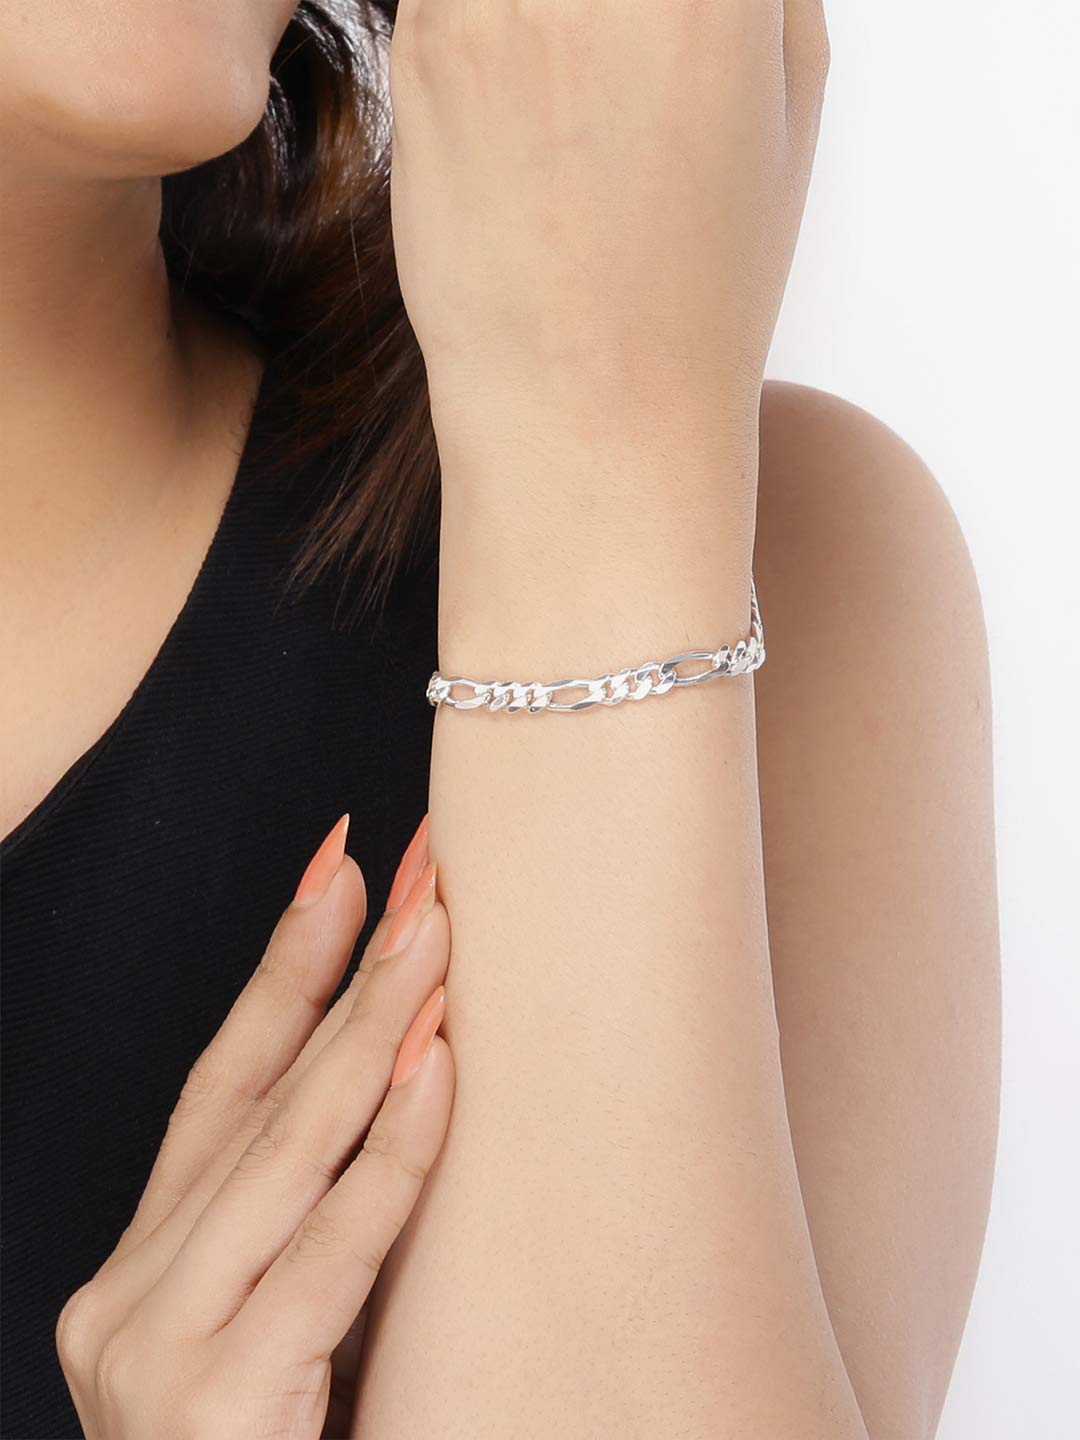 Retailer of 925 silver bracelet  Jewelxy  136131